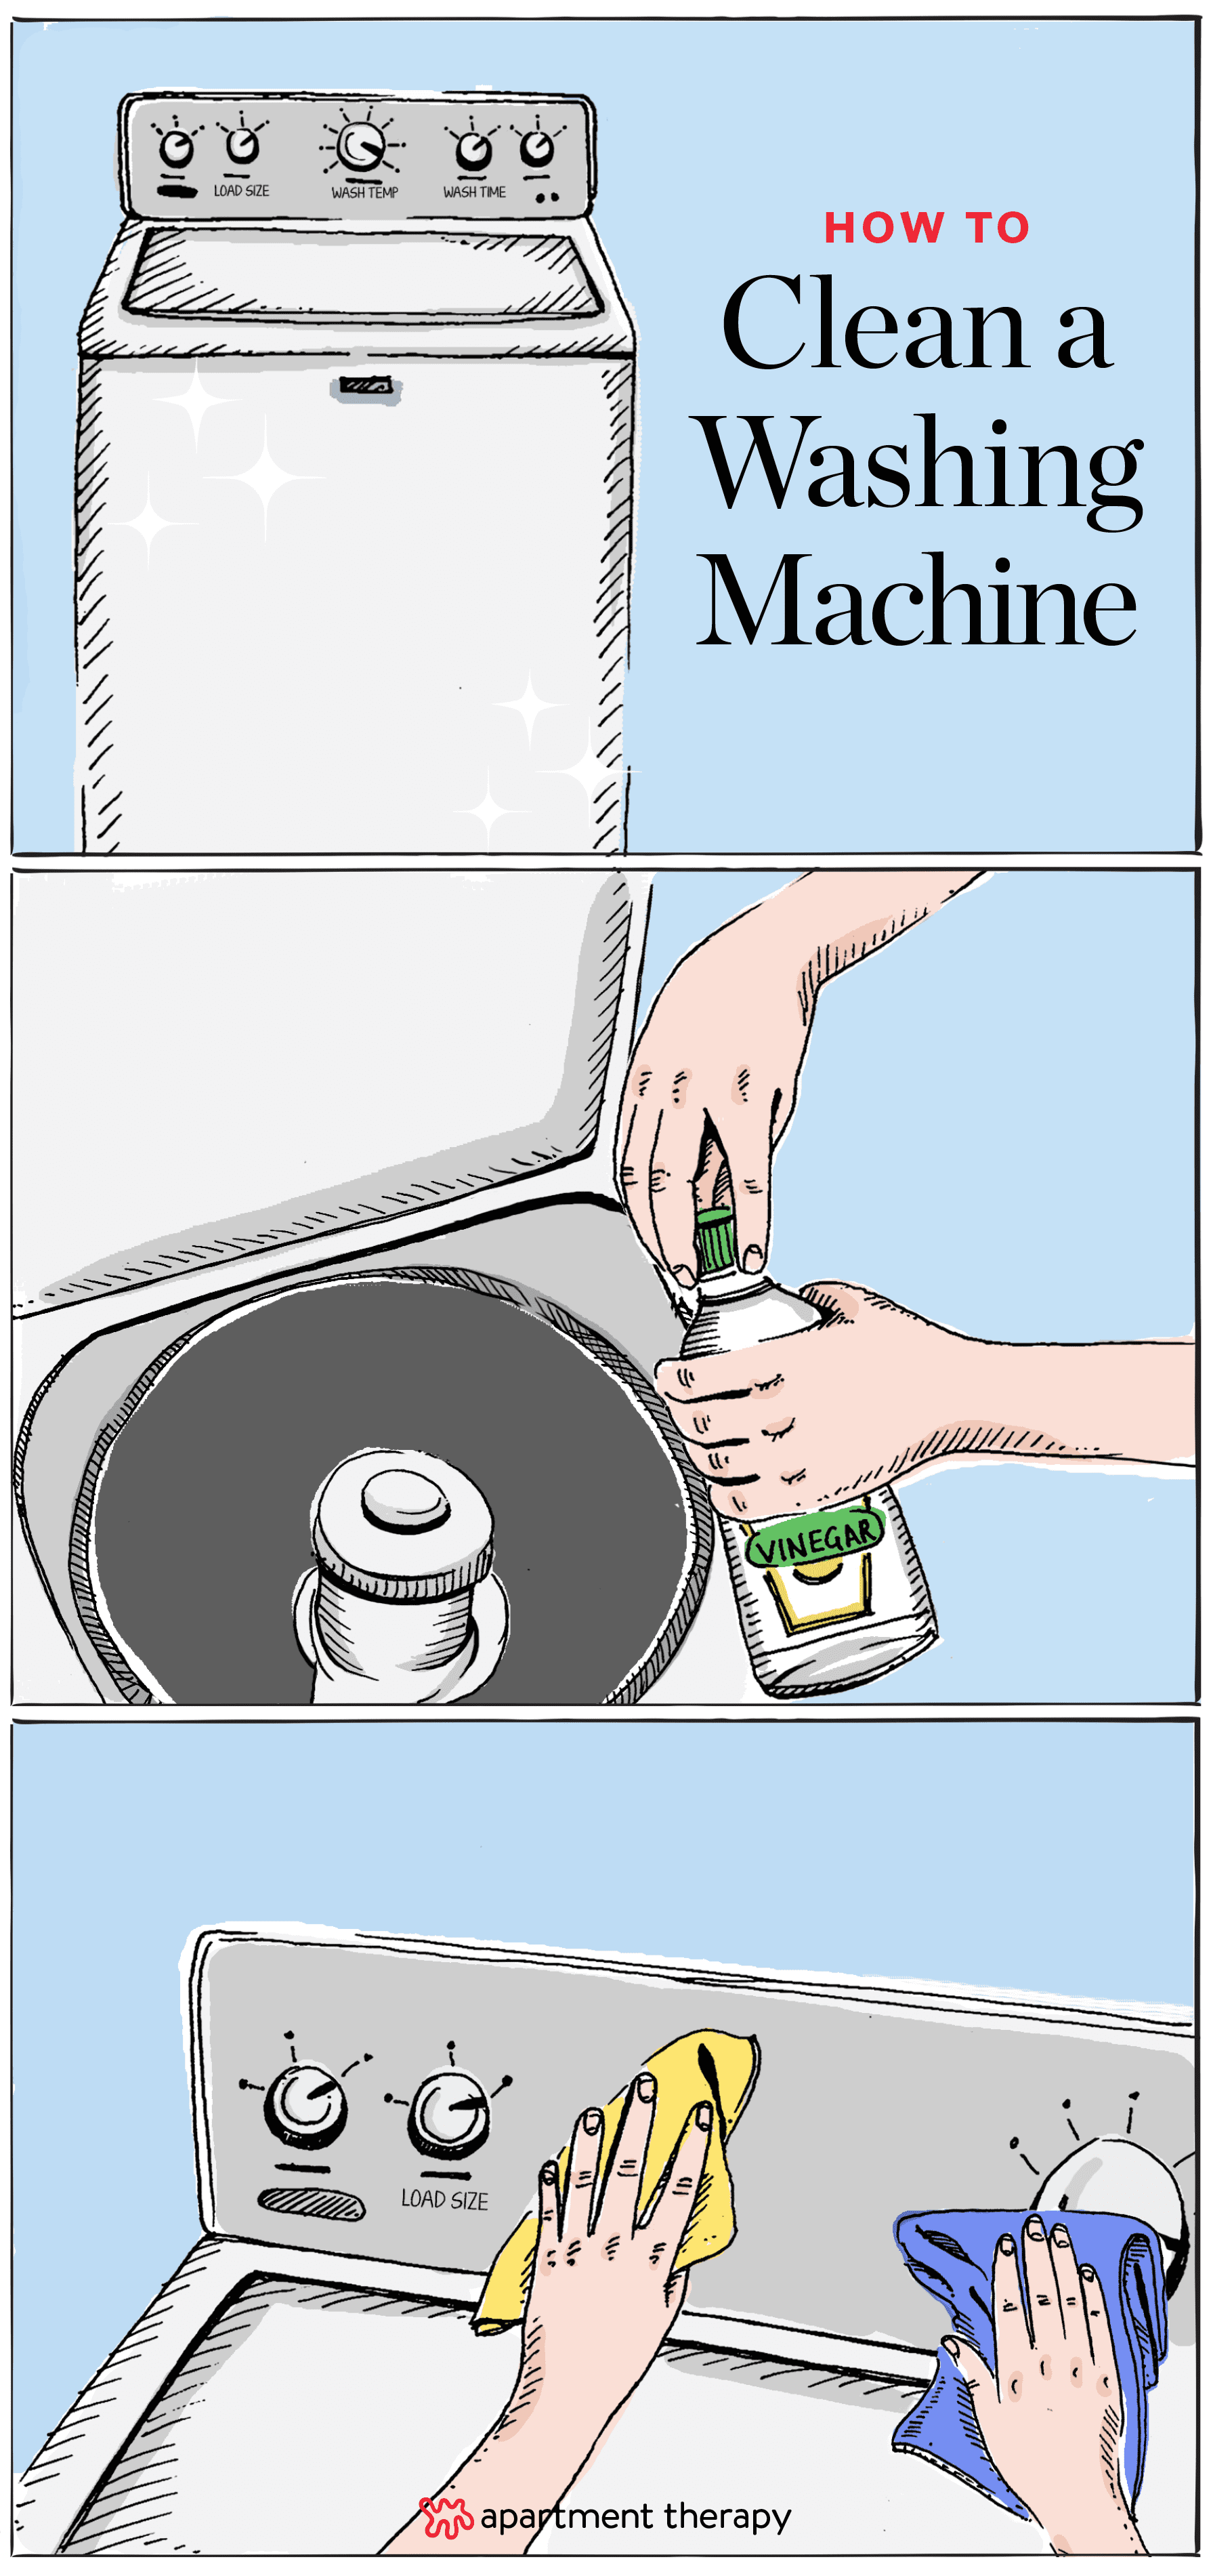 How to Clean Your Washing Machine - Top Loading Washing Machine